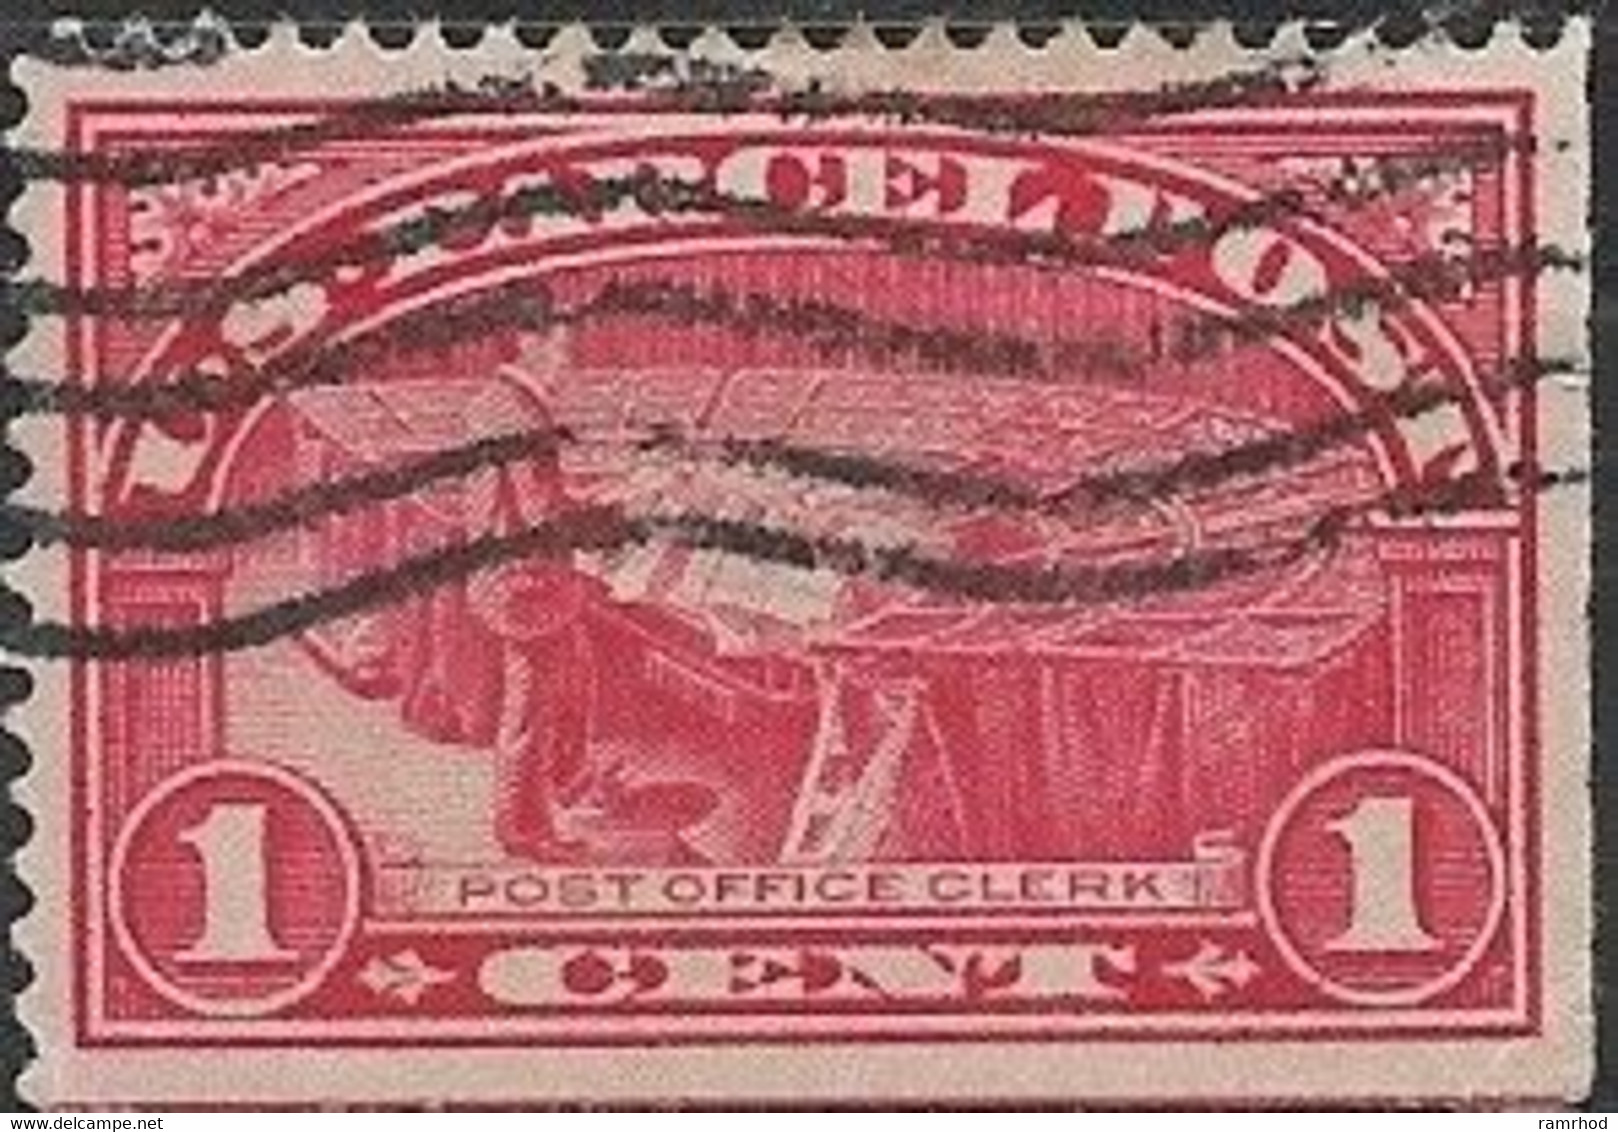 USA 1912 Parcel Post - Post Office Clerk - 1c. - Red FU - Reisgoedzegels